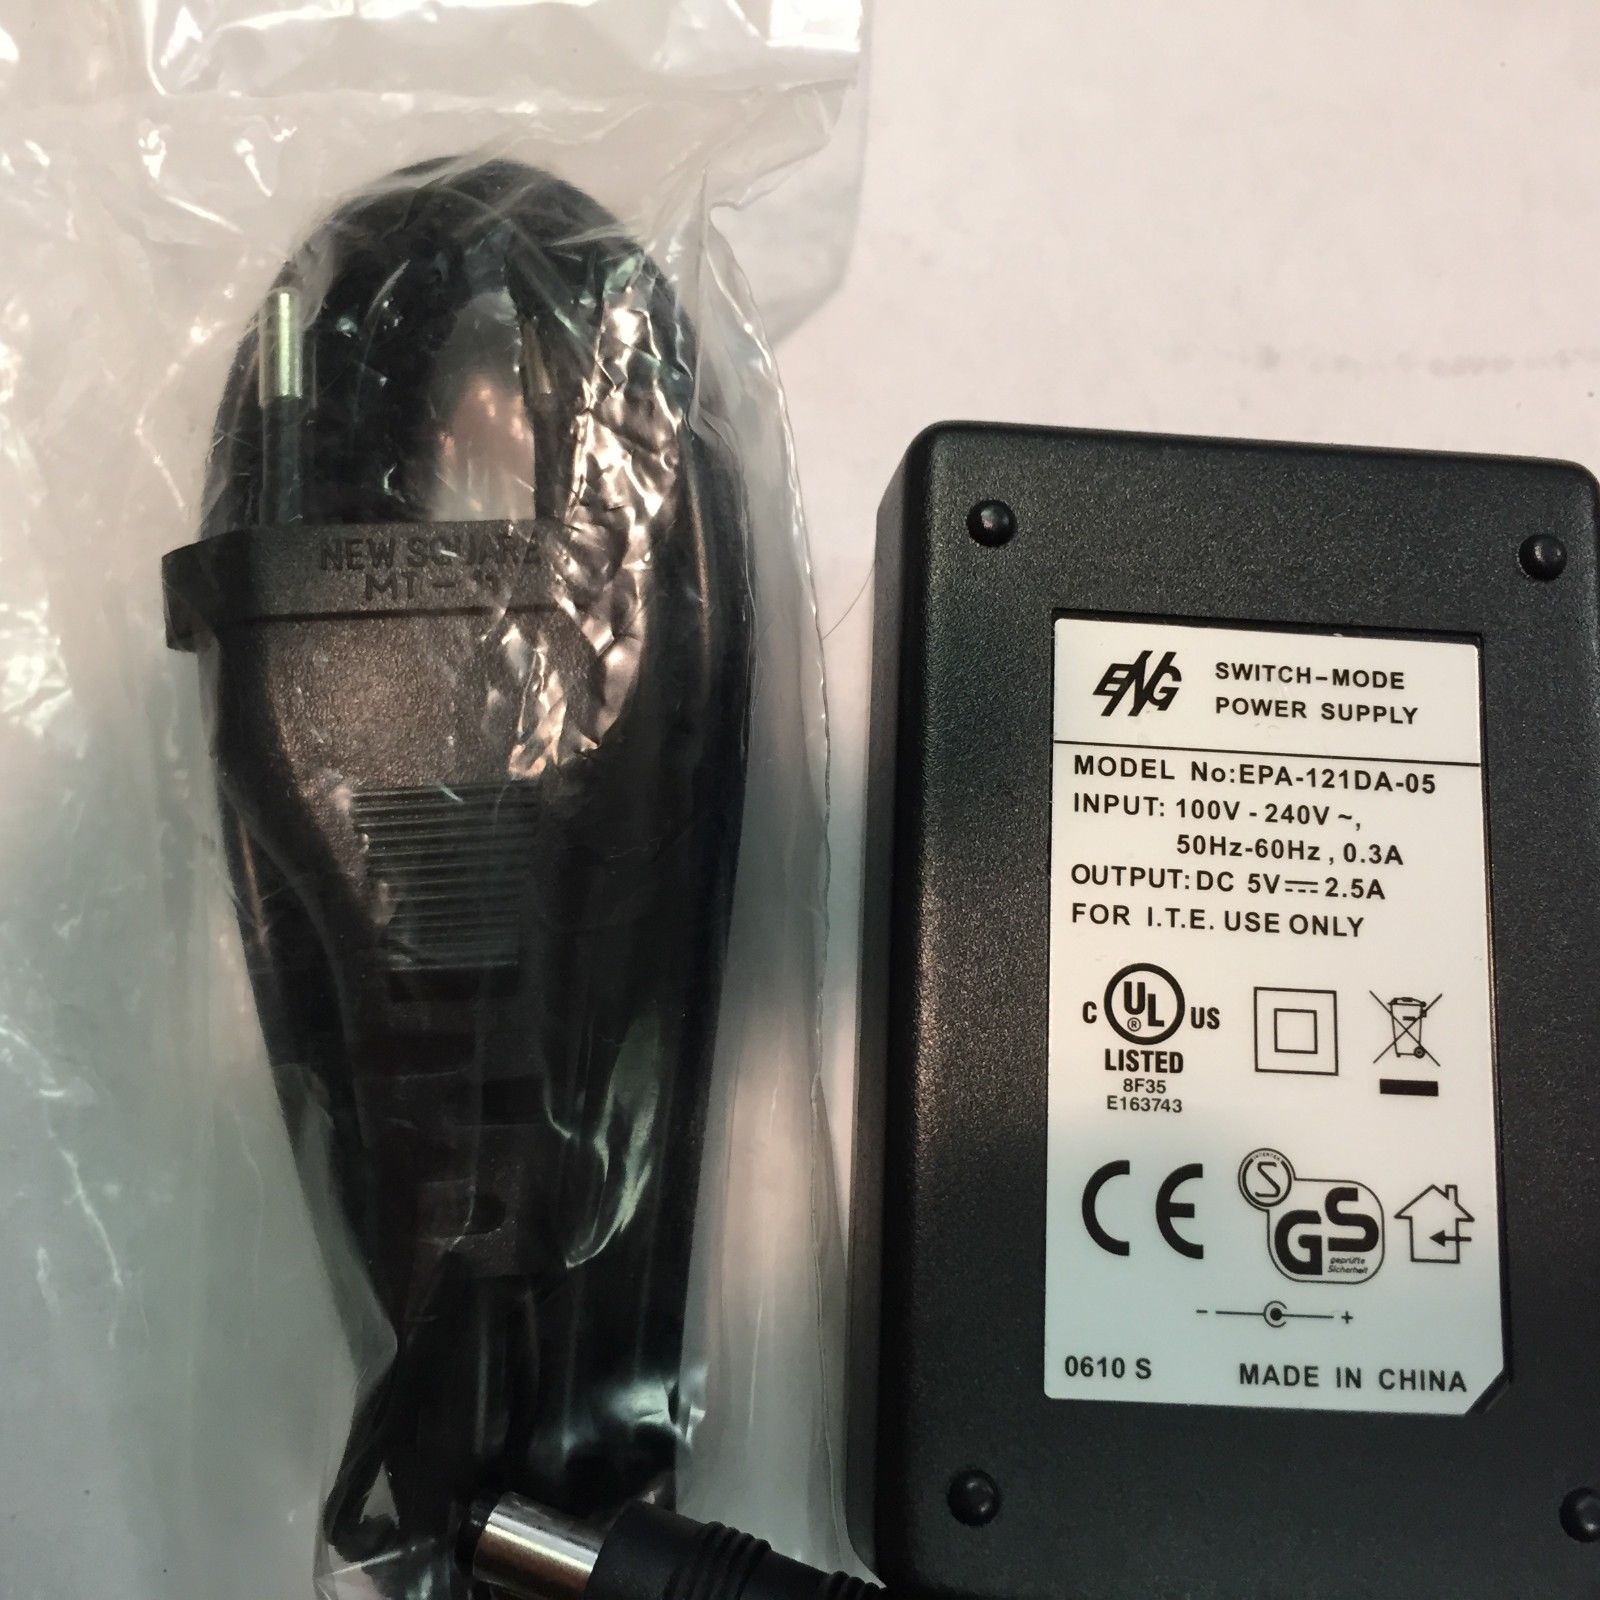 New ENG AC ADAPTER 5V 2.5A EPA-121DA-05 FOR COMPAQ IPAQ H3900 100V-240V Switch Mode power supply